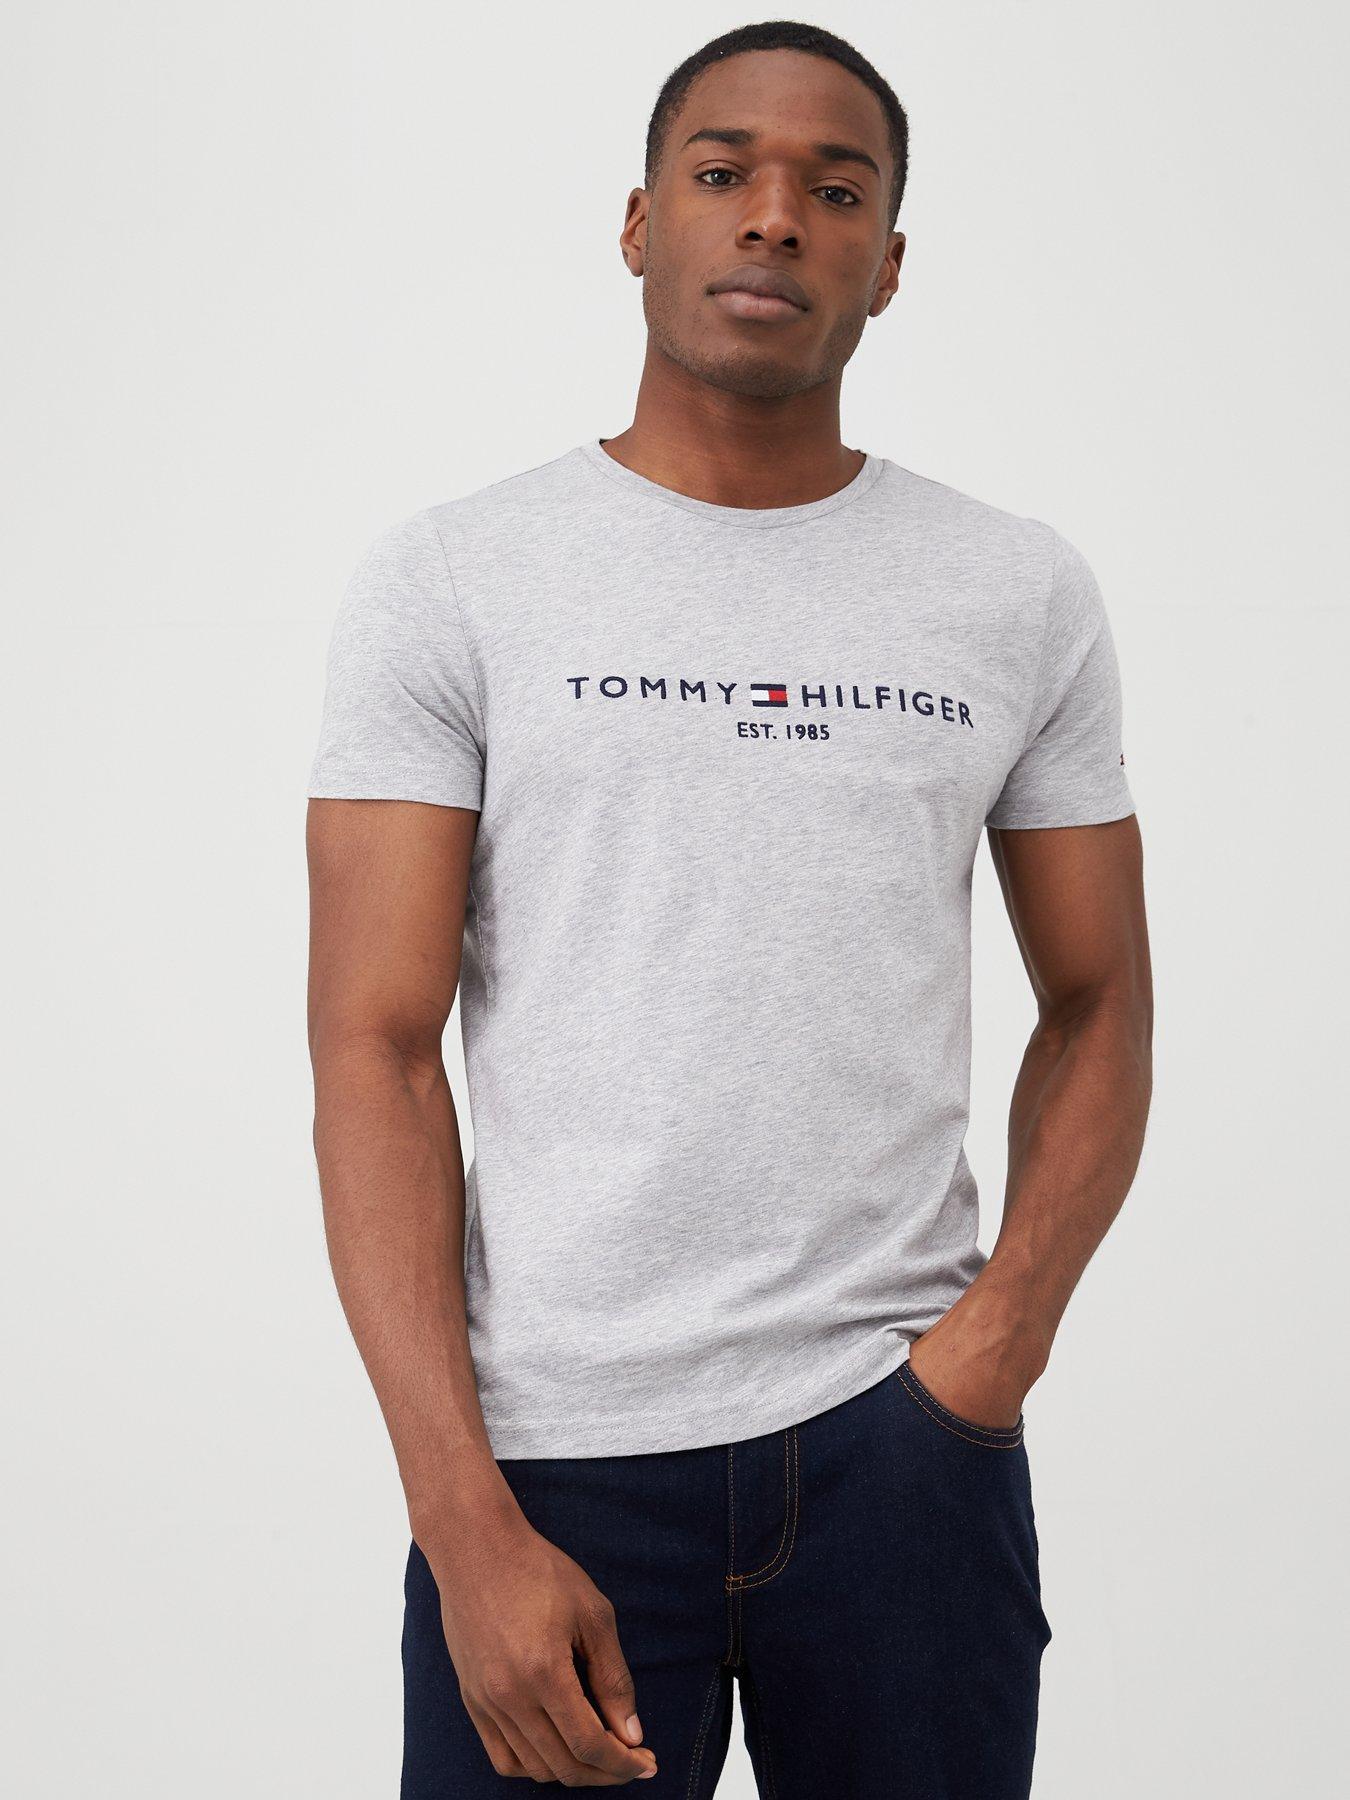 tommy hilfiger gray t shirt